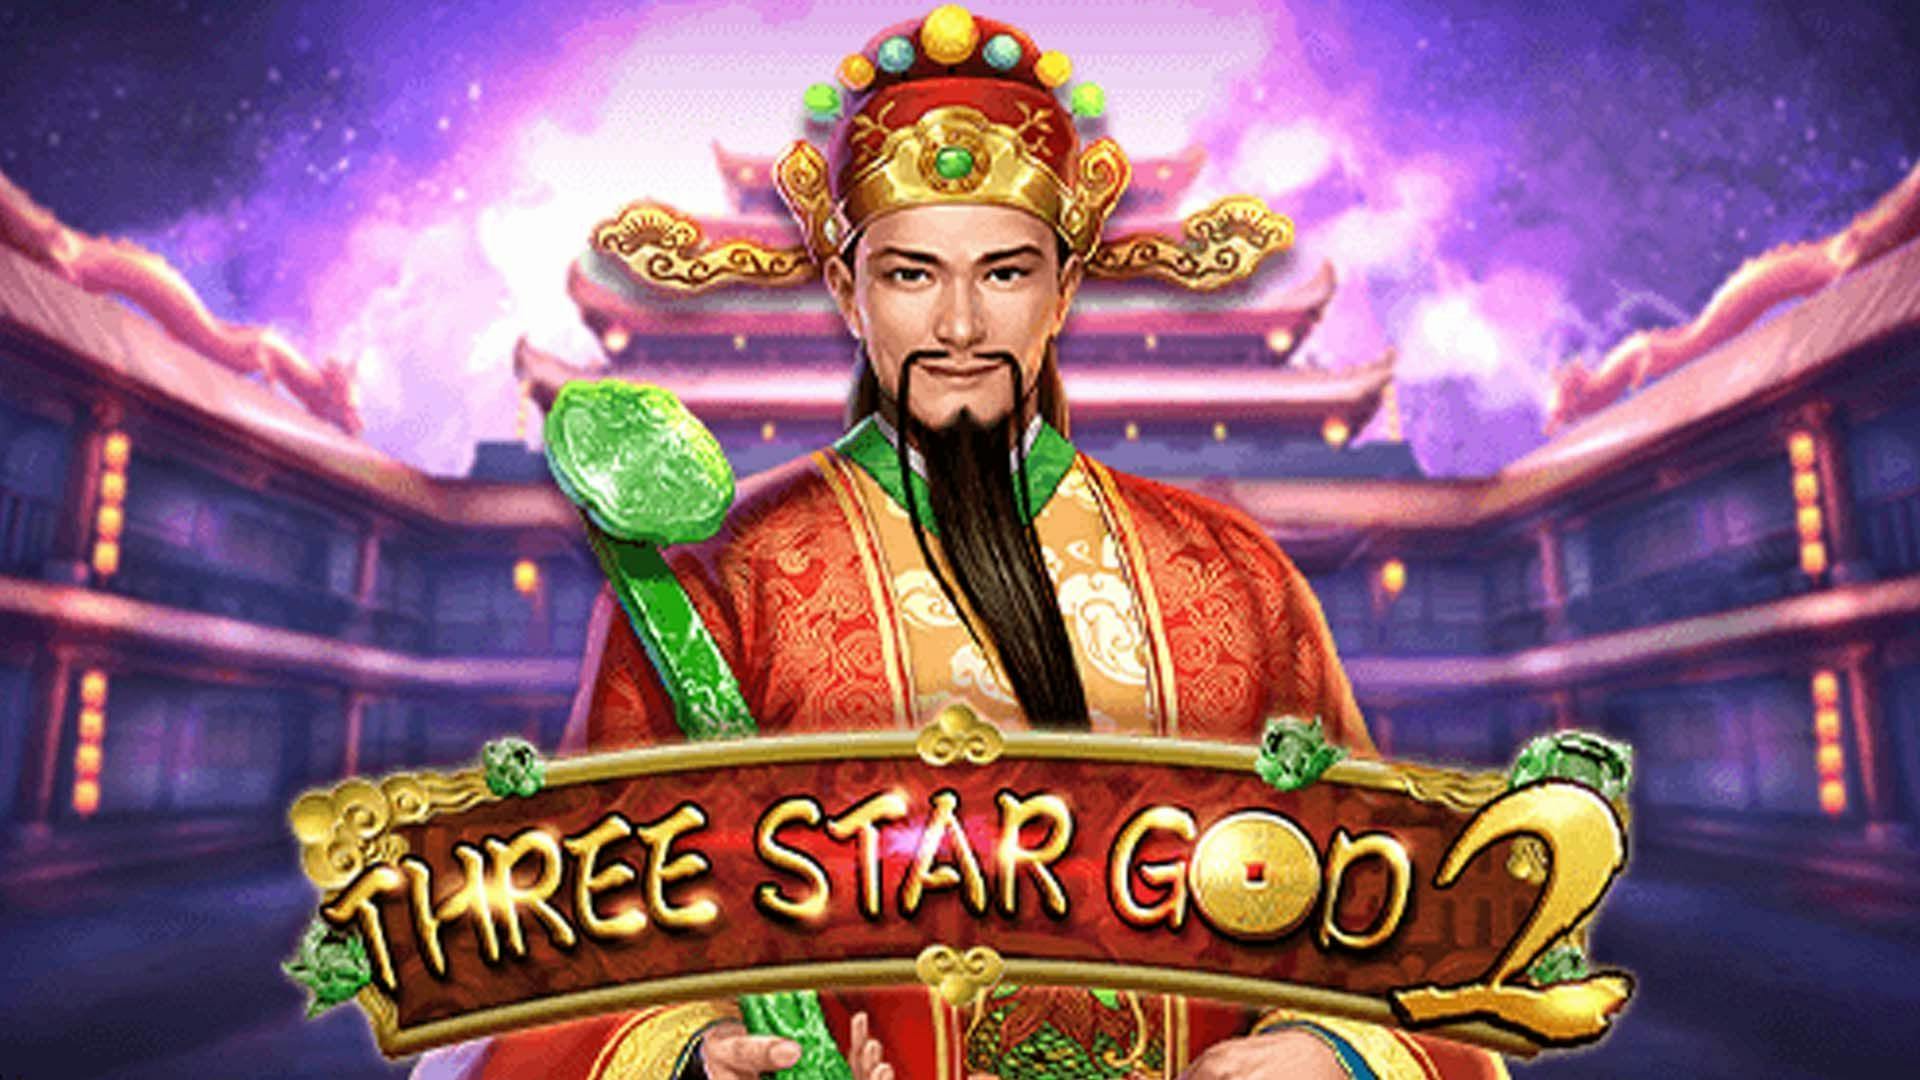 Three Star God 2 Slot Machine Online Free Game Play